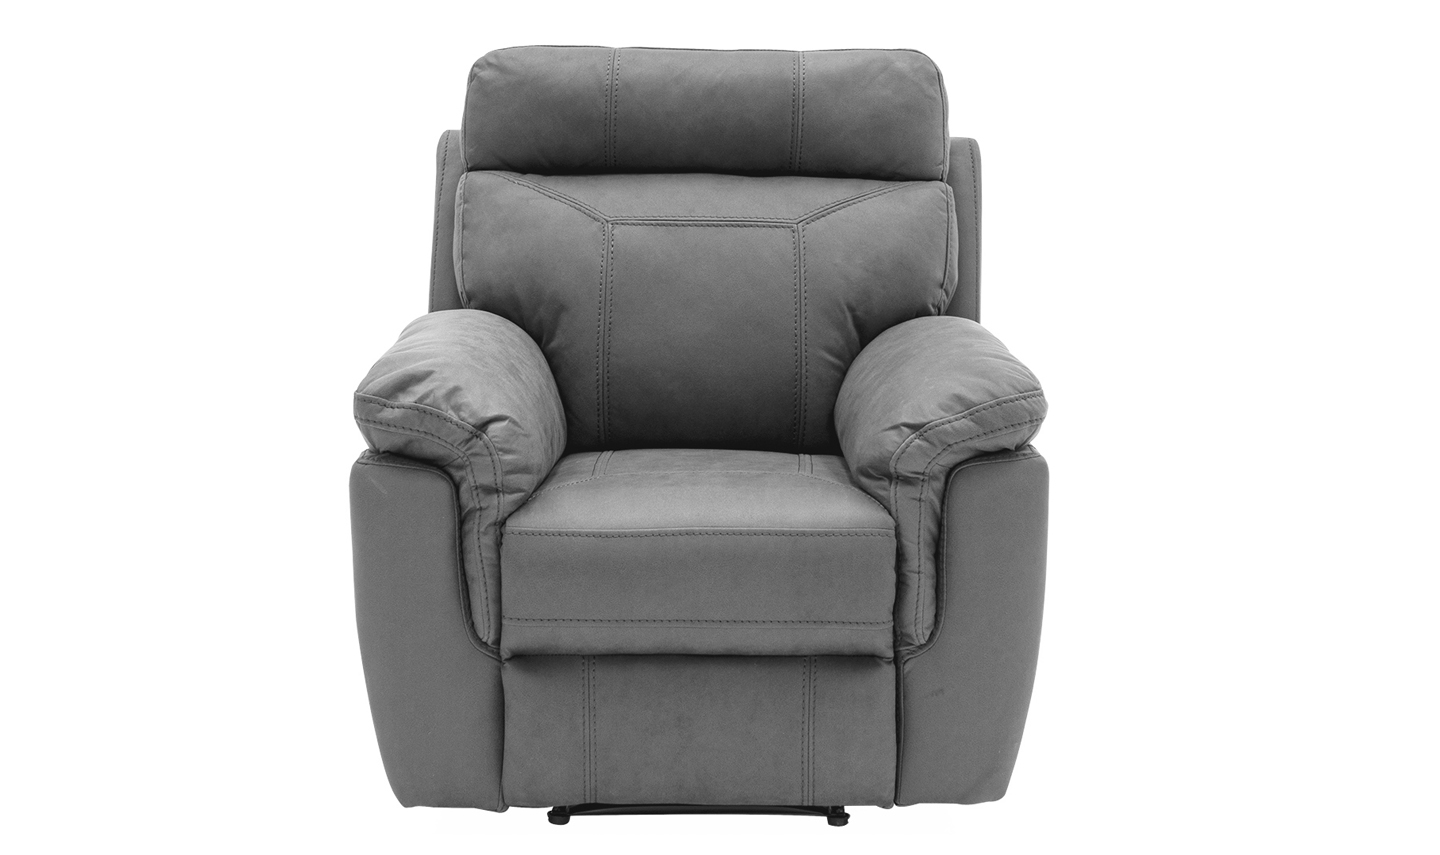 Baxter Grey 1 Seater Recliner Chair